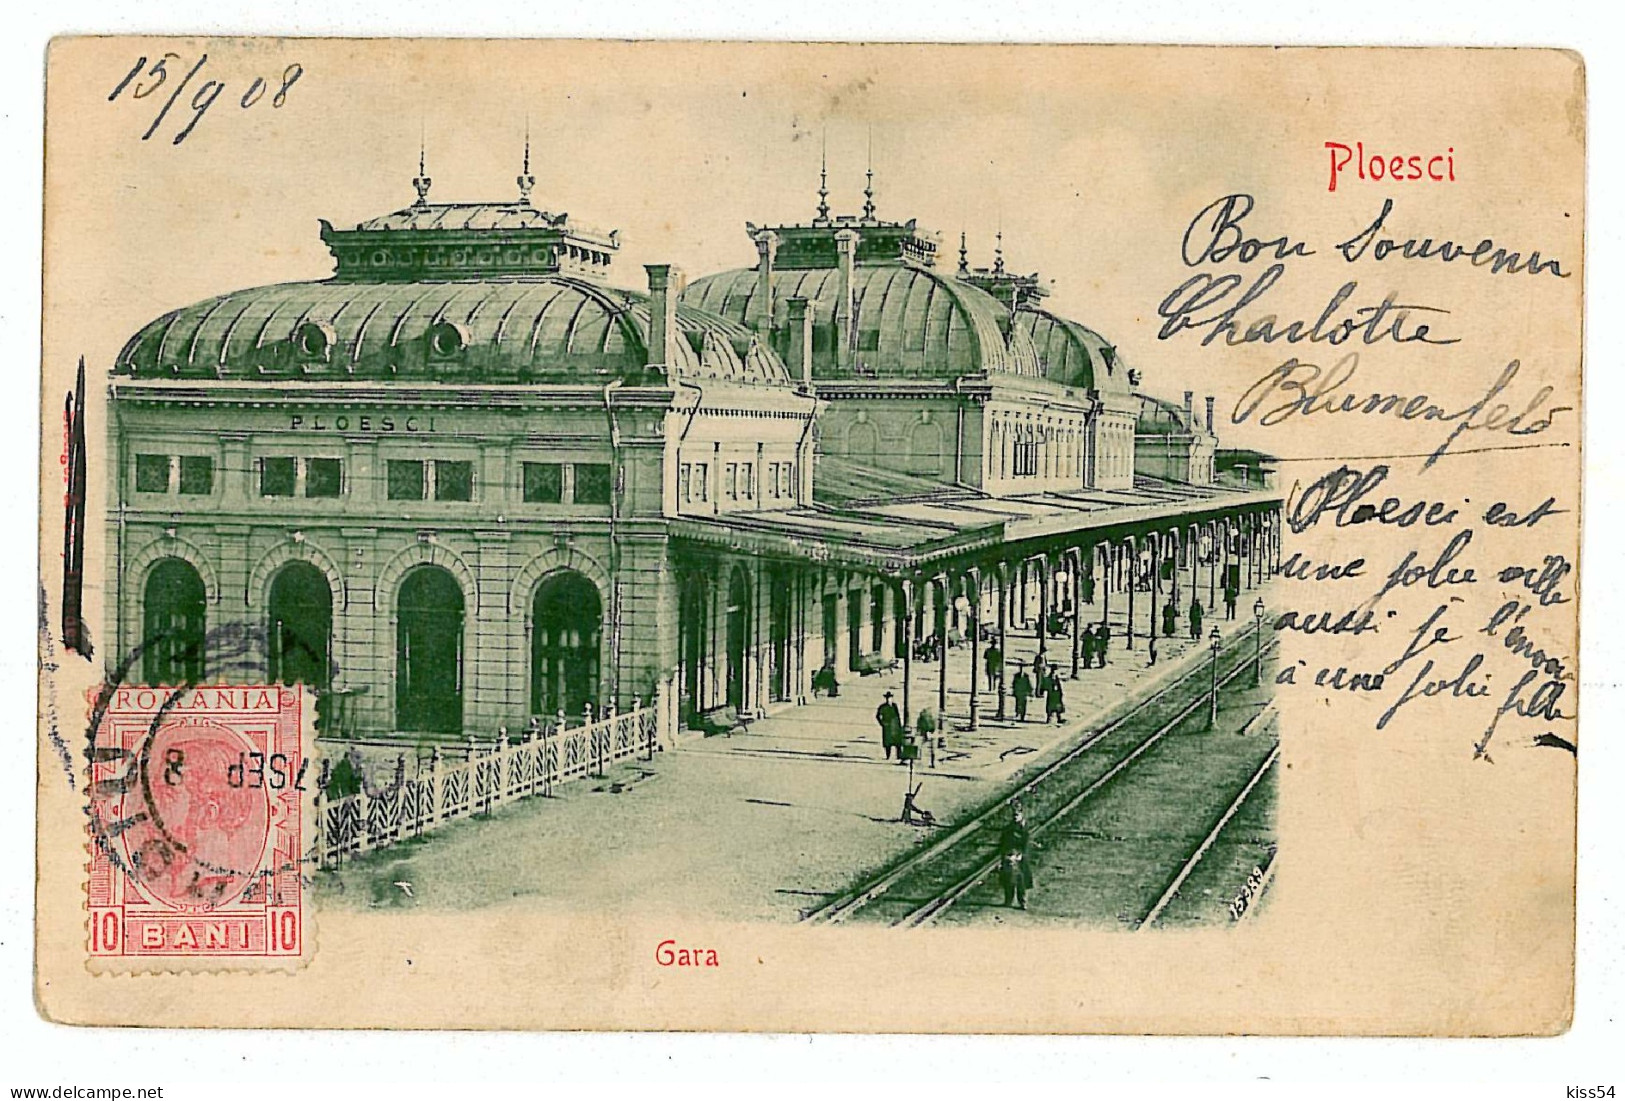 RO 36 - 3224 PLOIESTI, Railway Station, Romania - Old Postcard - Used - 1908 - TCV - Romania